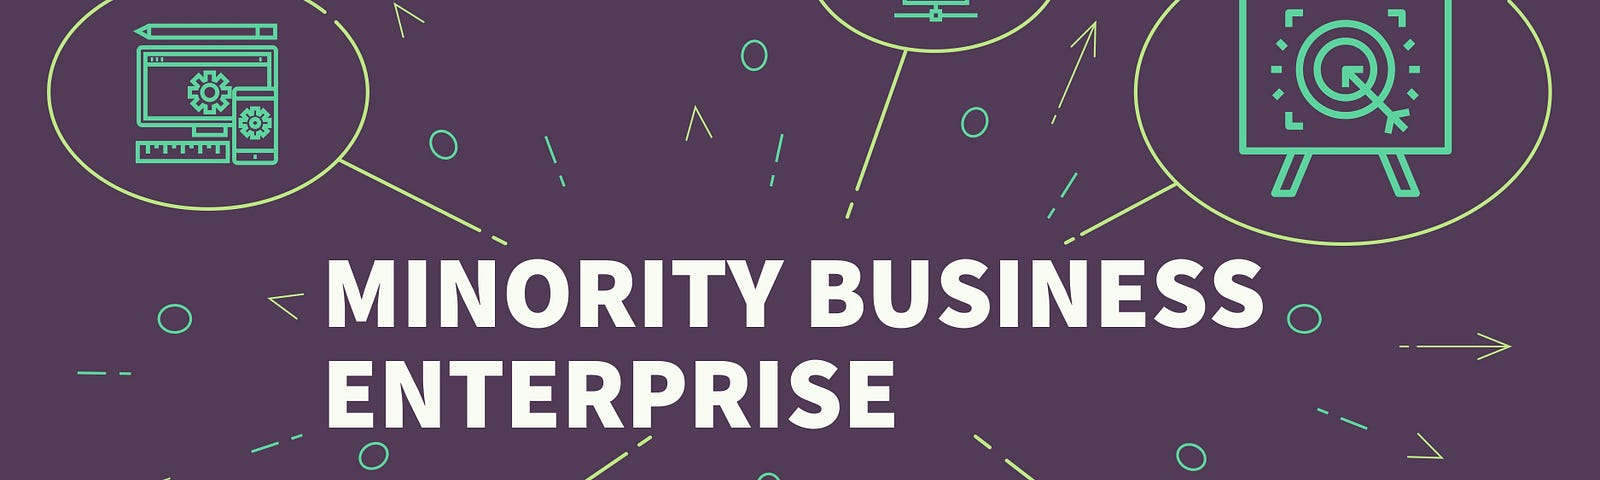 Minority Business Enterprise image